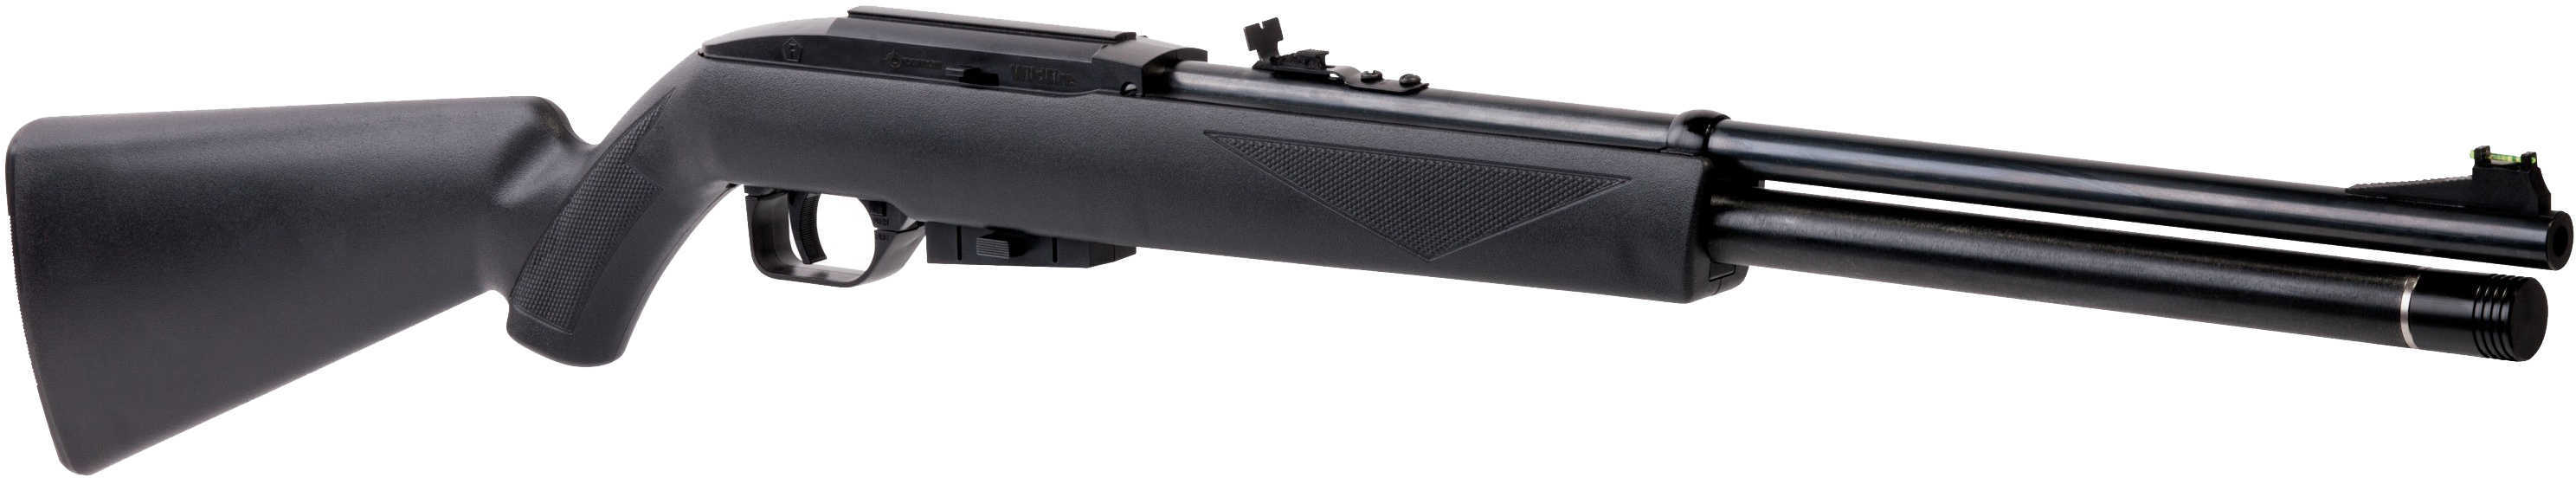 Benjamin Sheridan WildFire Semi Automatic PCP, .177 Caliber Air Rifle Md: BPWF17